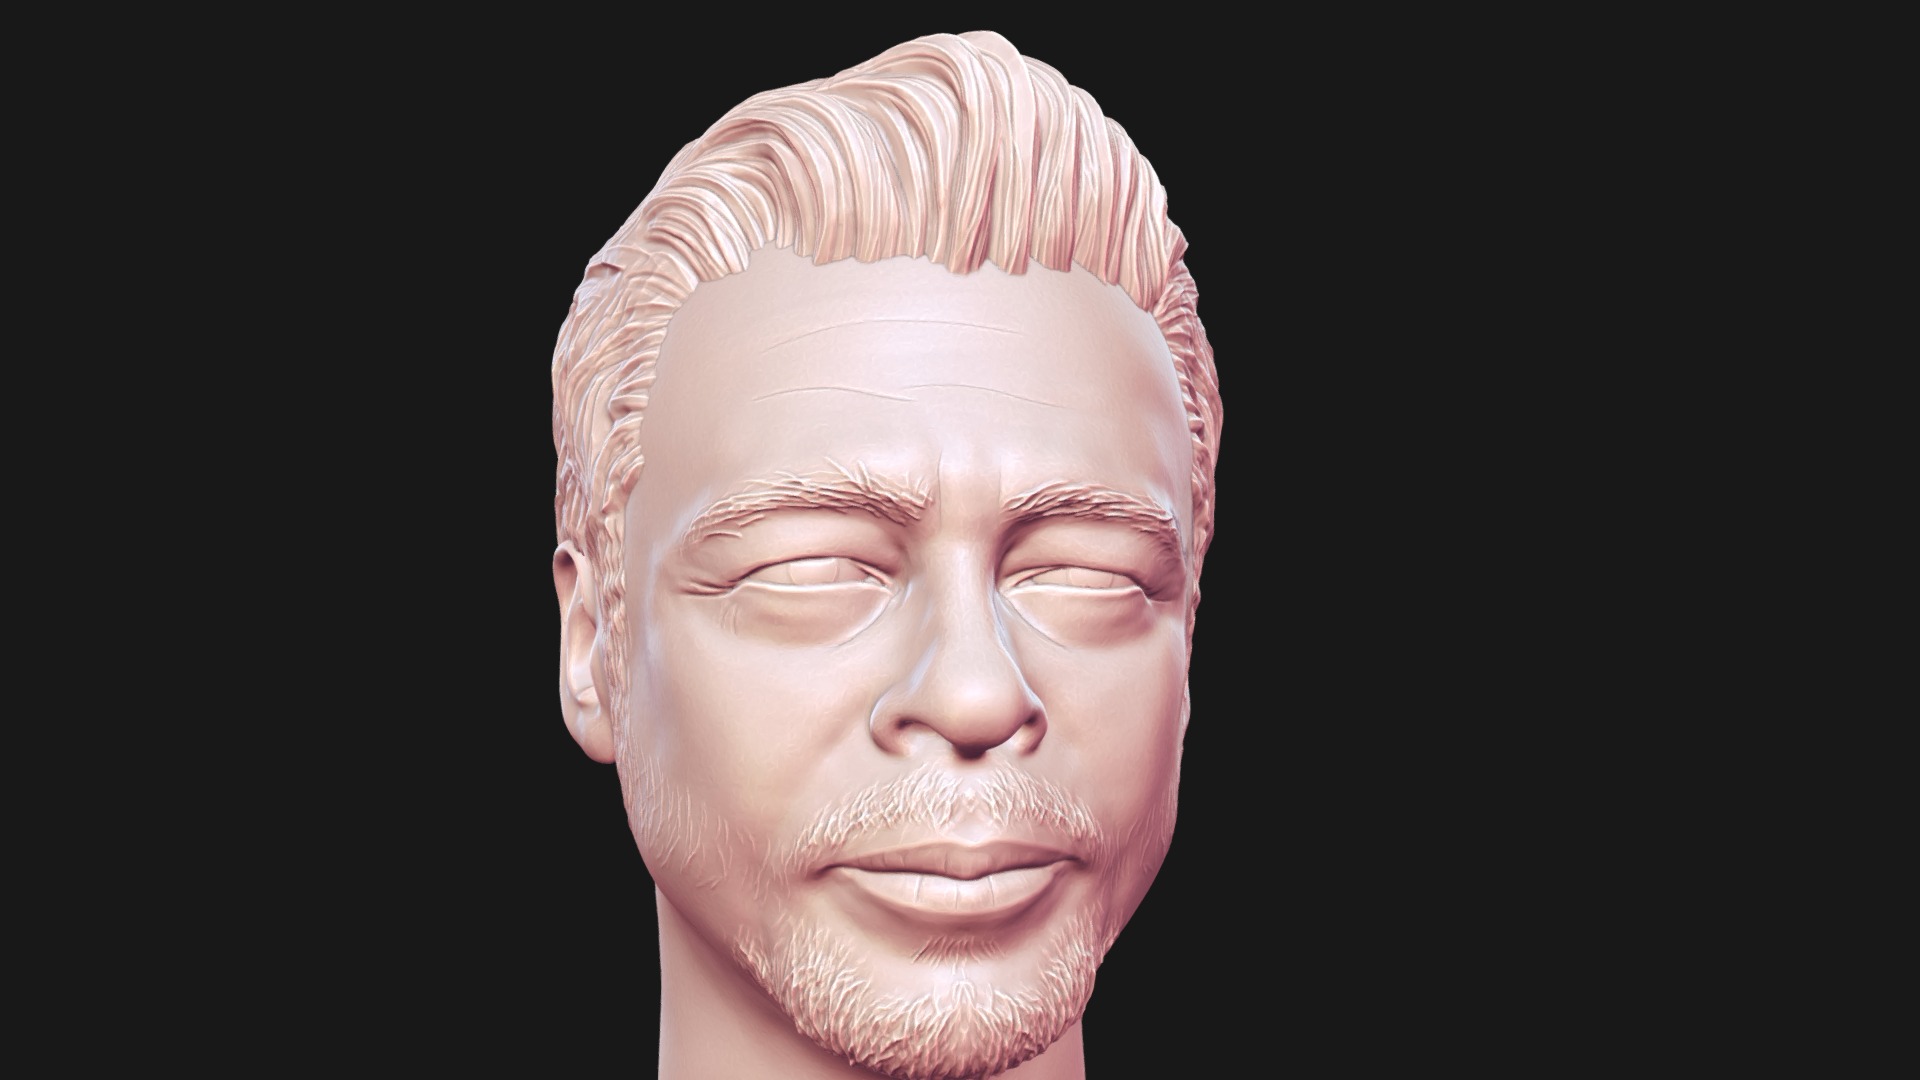 3D model Benicio Del Toro 3Dprintable portrait - This is a 3D model of the Benicio Del Toro 3Dprintable portrait. The 3D model is about a person with a white beard.